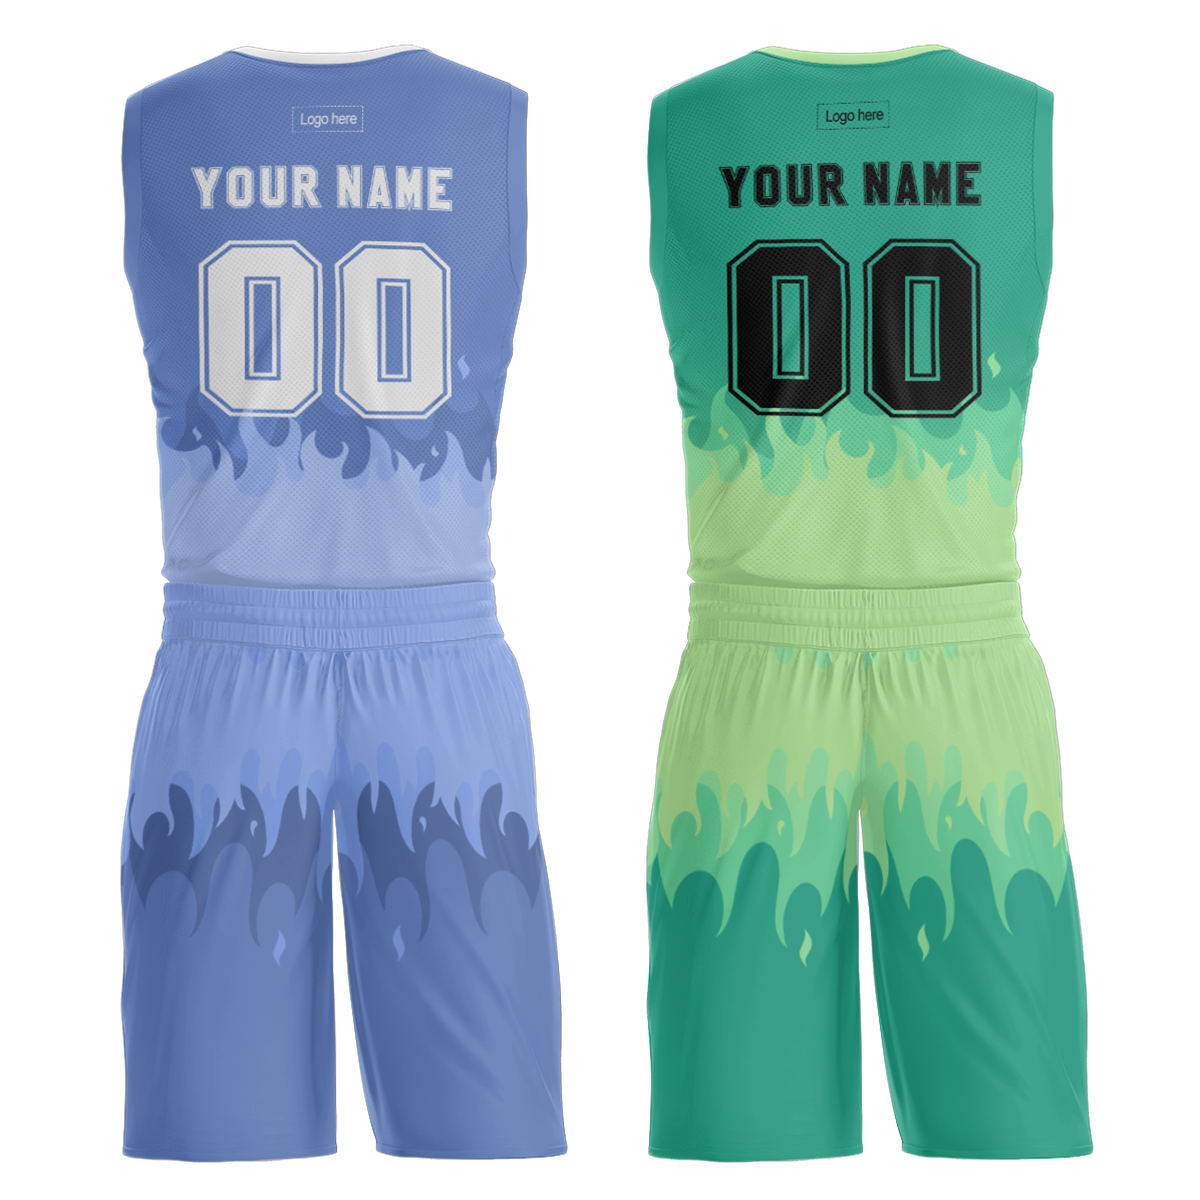 Digital Printing Custom Sports Suits Men Newest Best Reversible Basketball Jerseys Shirts Tops Sportswear